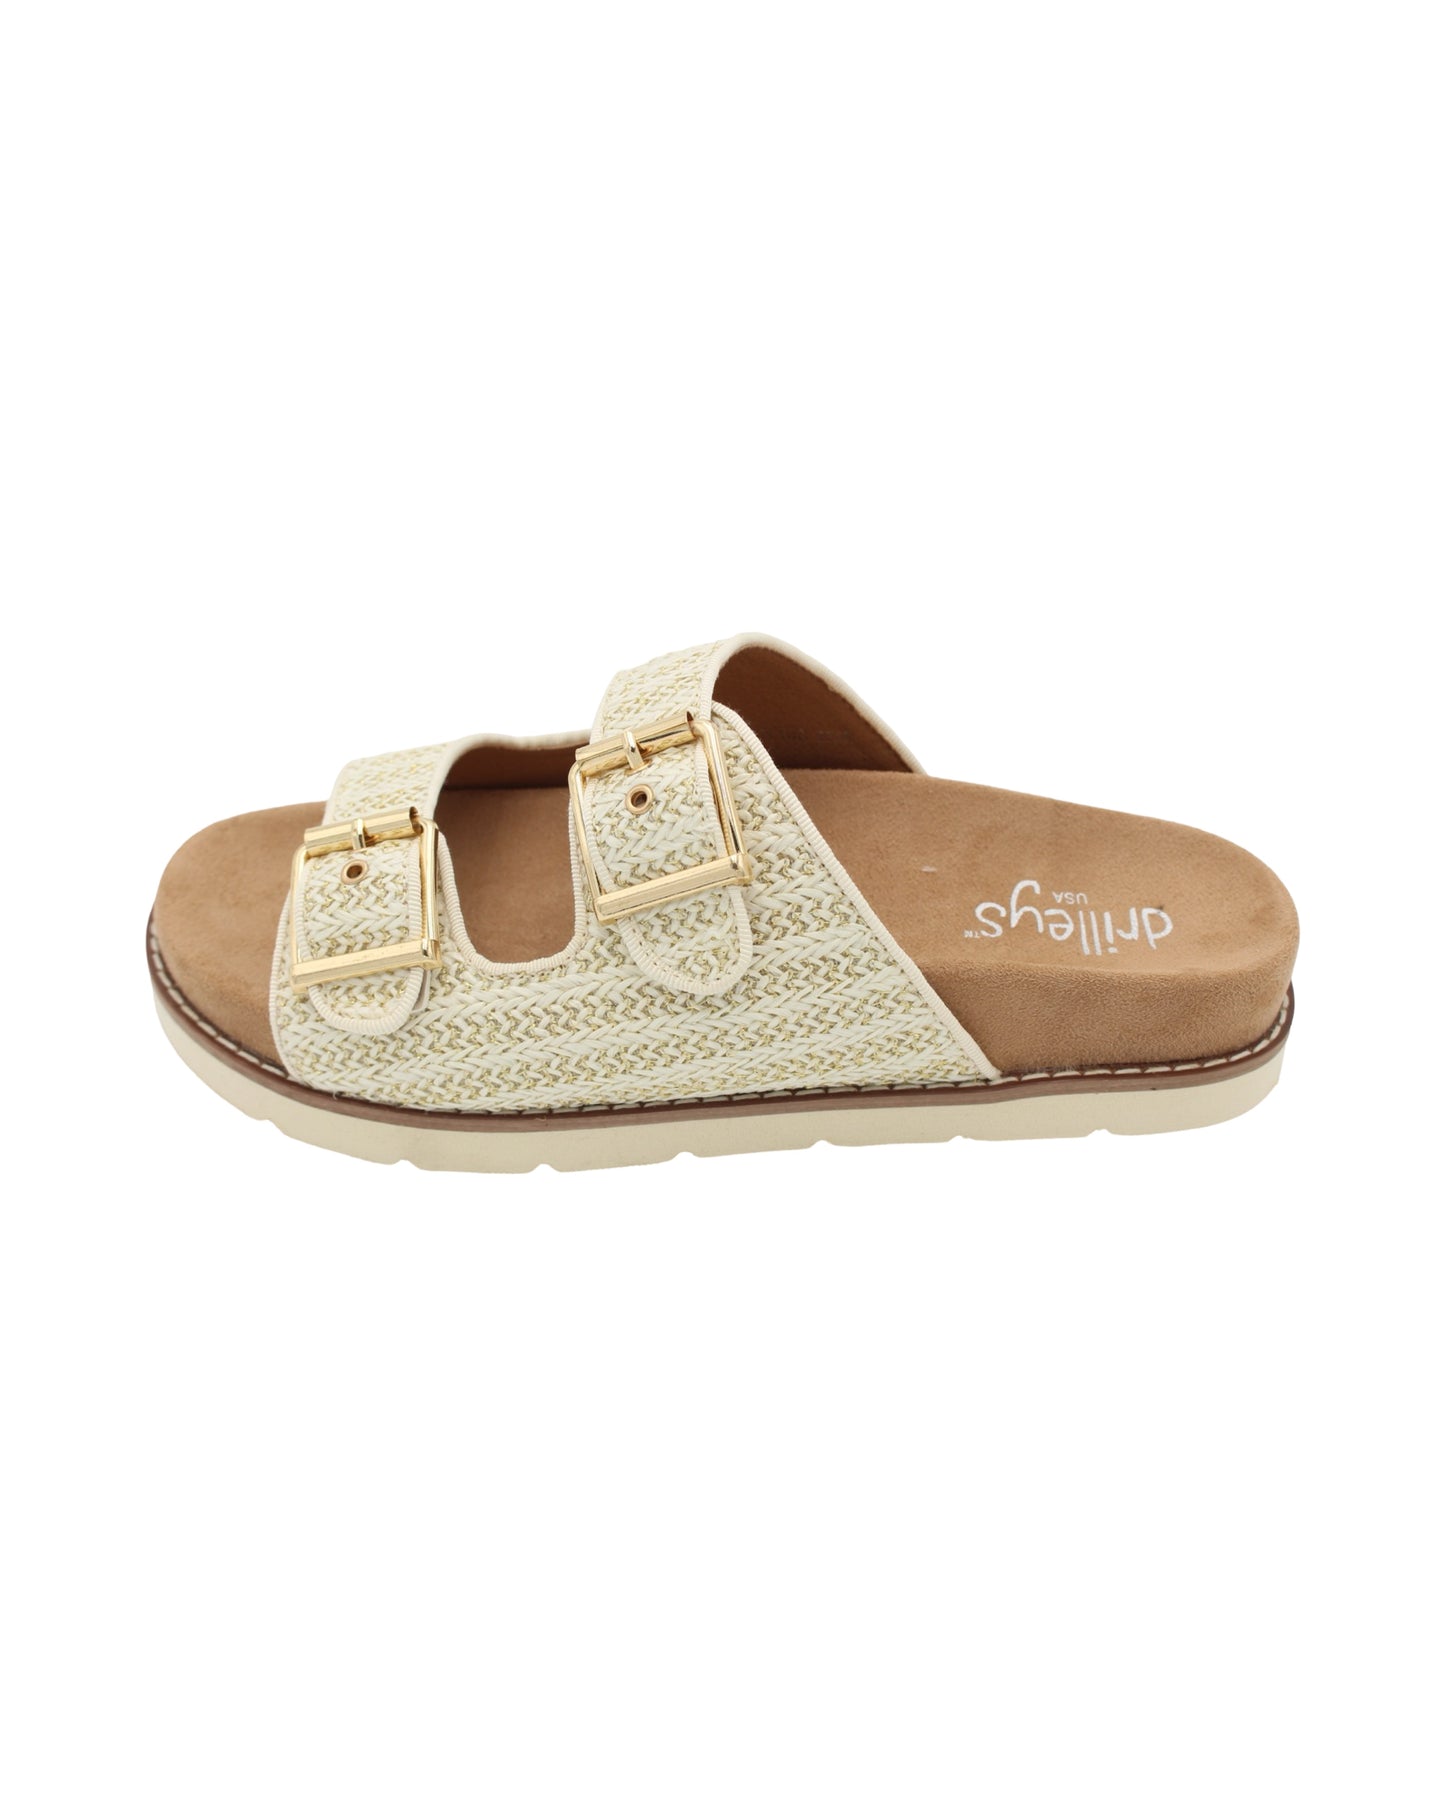 Drilleys - Ladies Shoes Sandals Cream, Gold (2456)